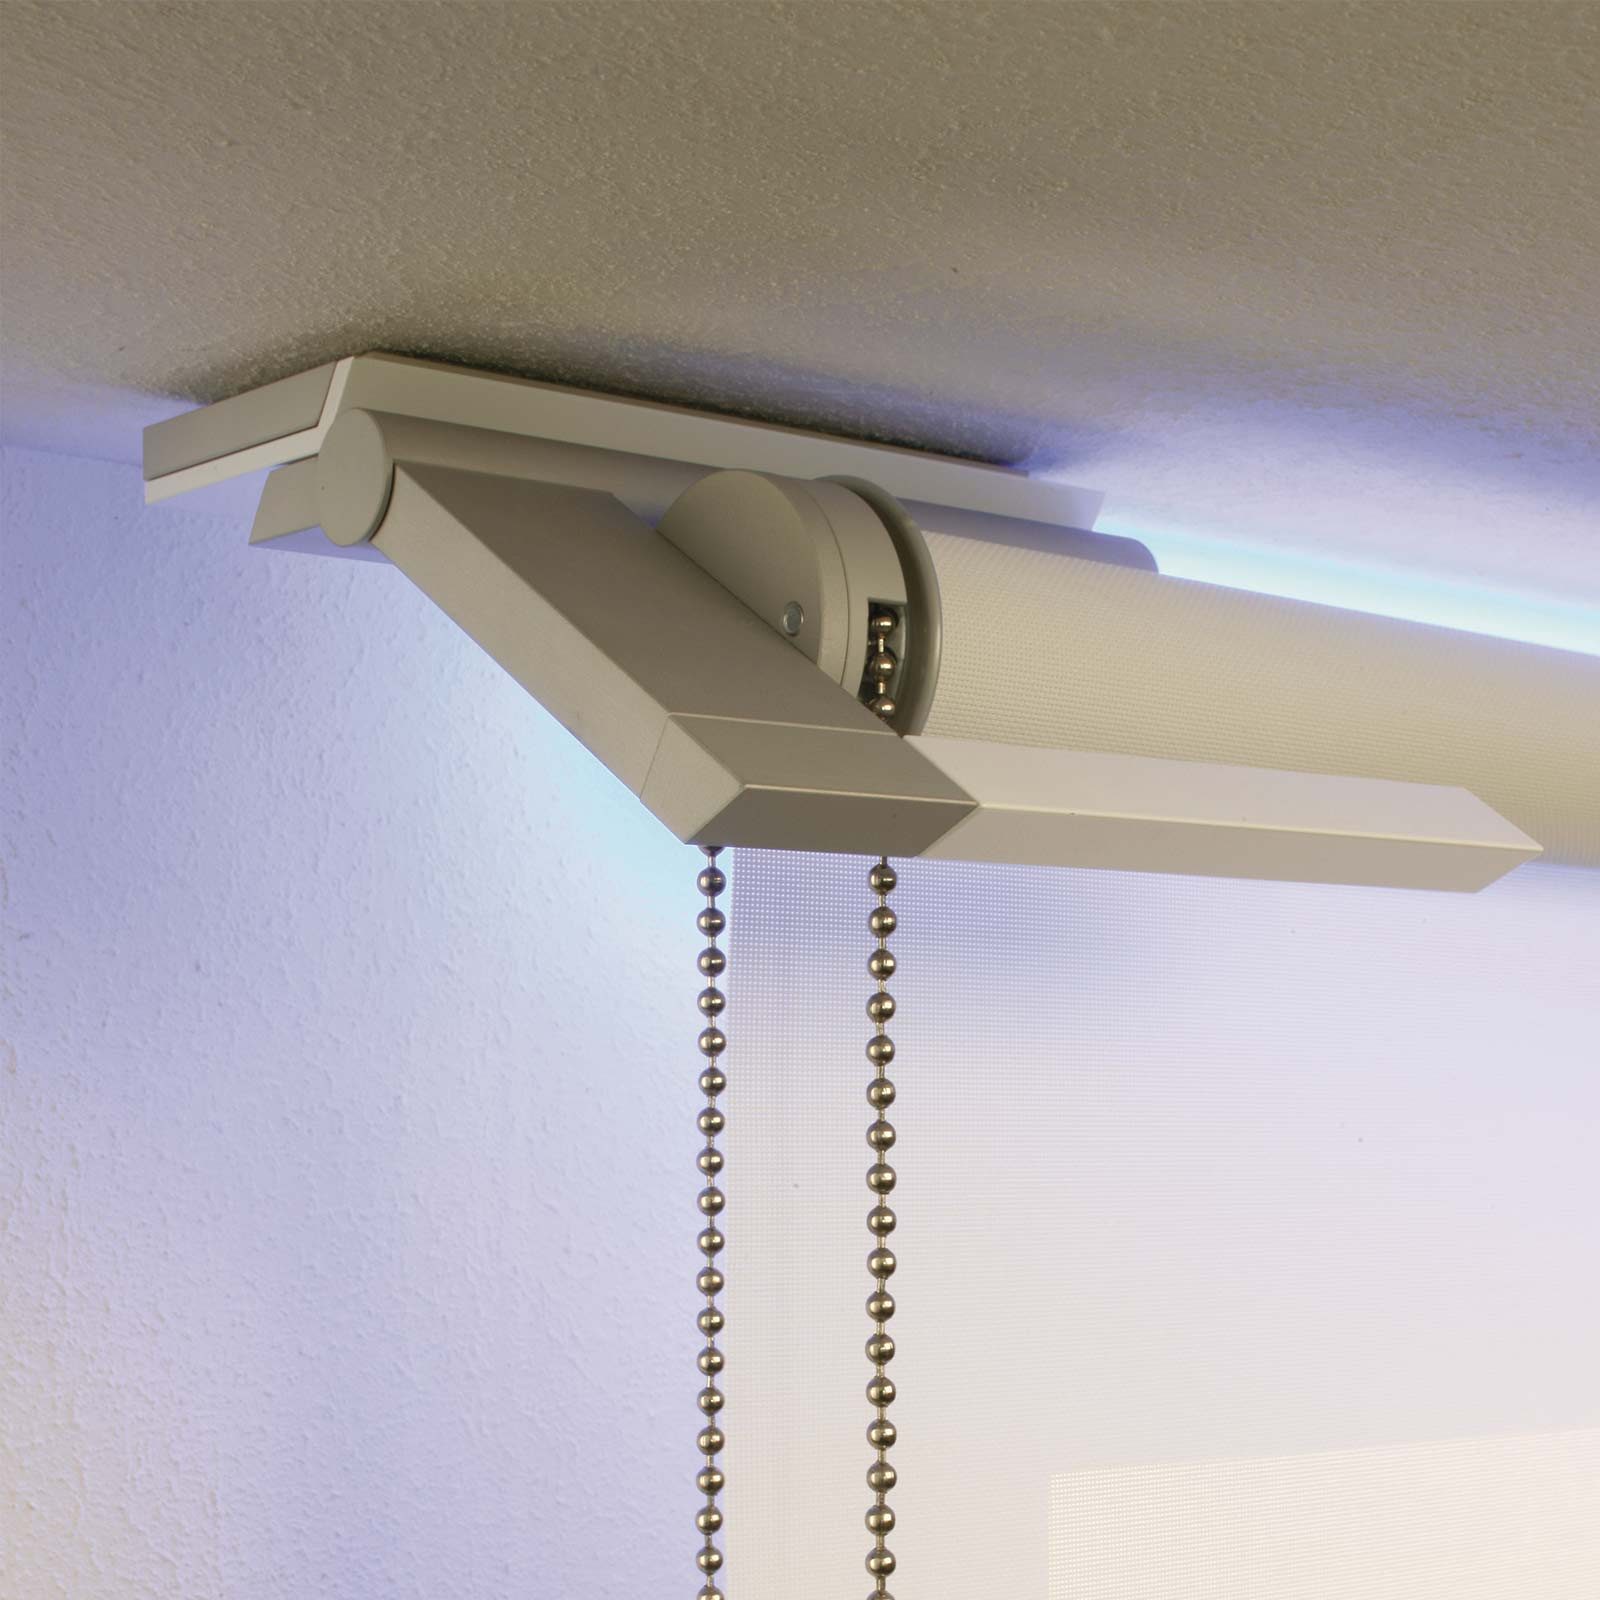 Hypno Top — A soffitto con led RGB